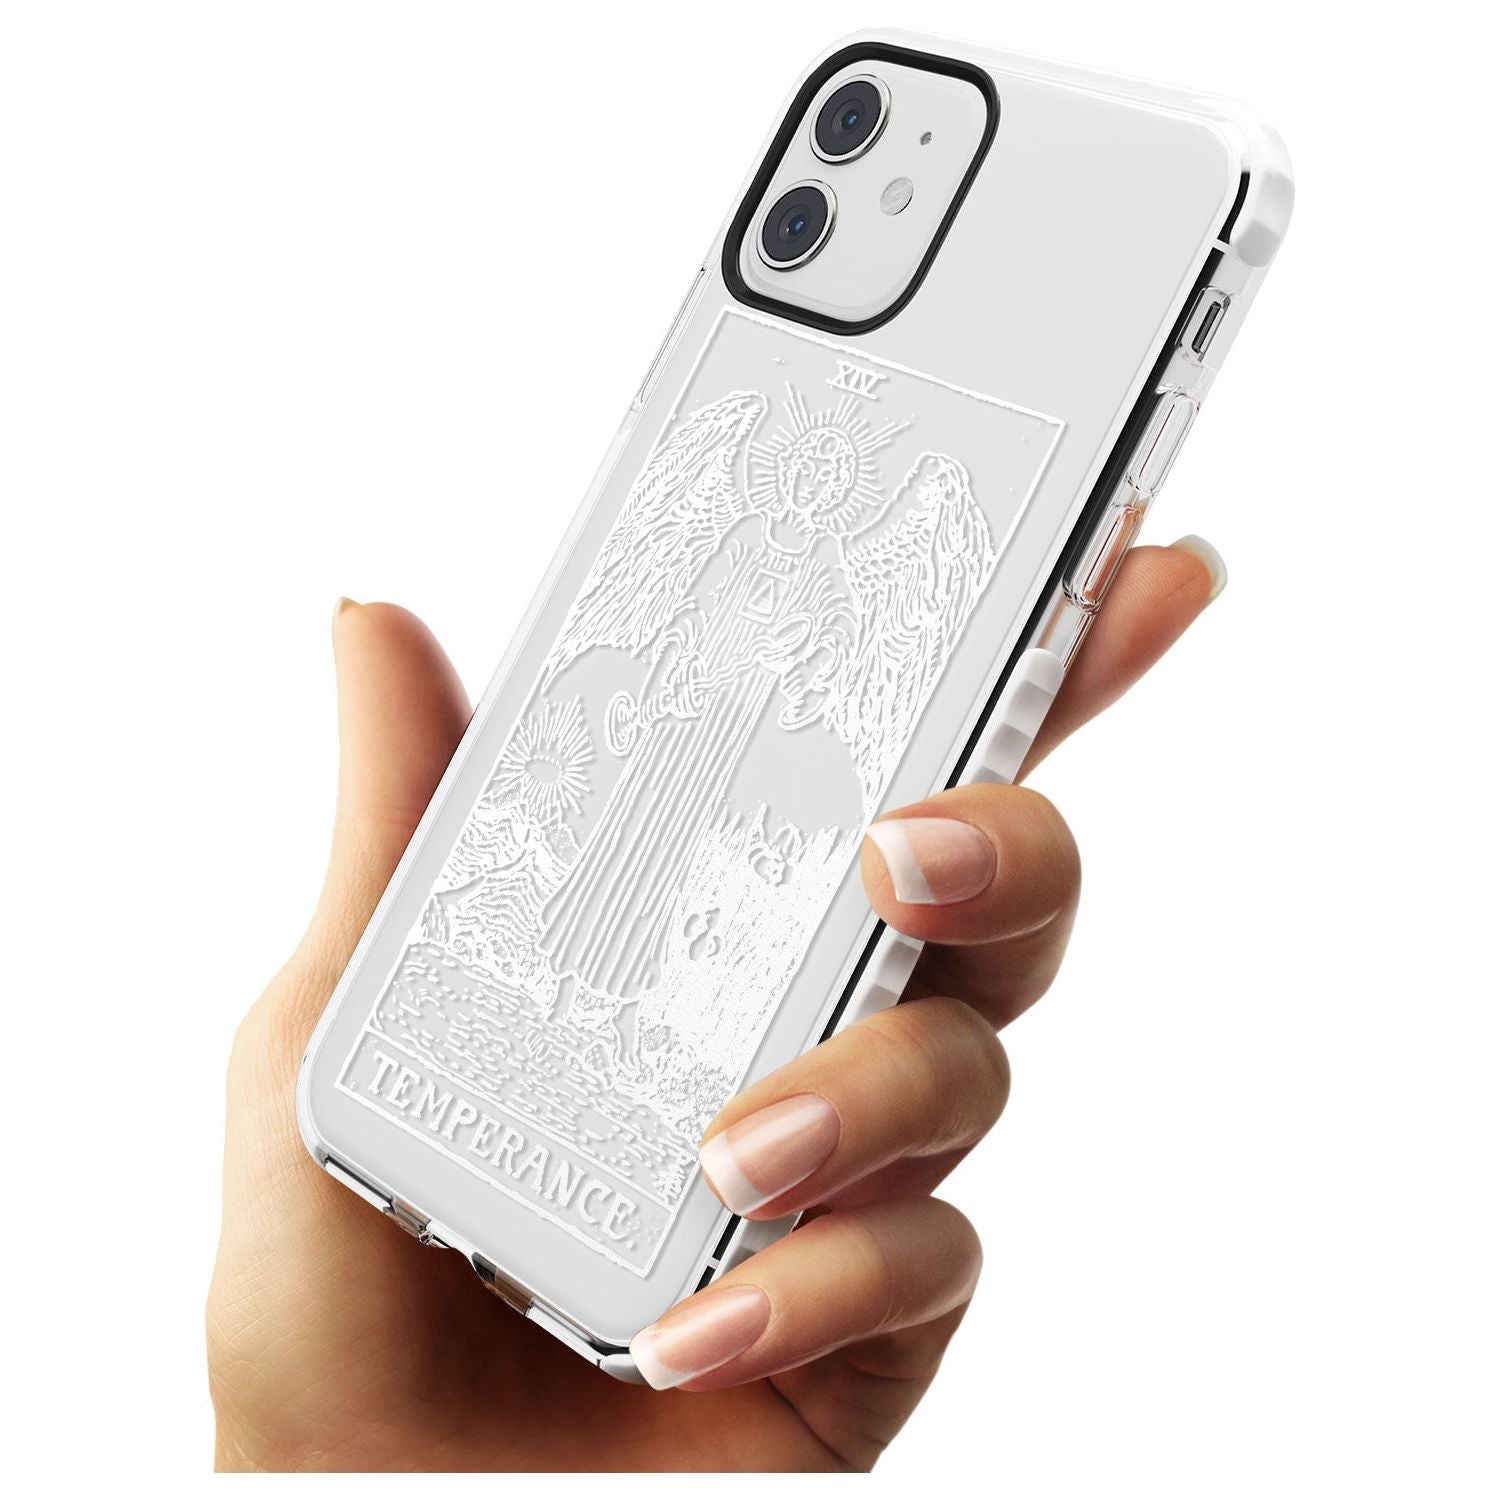 Temperance Tarot Card - White Transparent Slim TPU Phone Case for iPhone 11